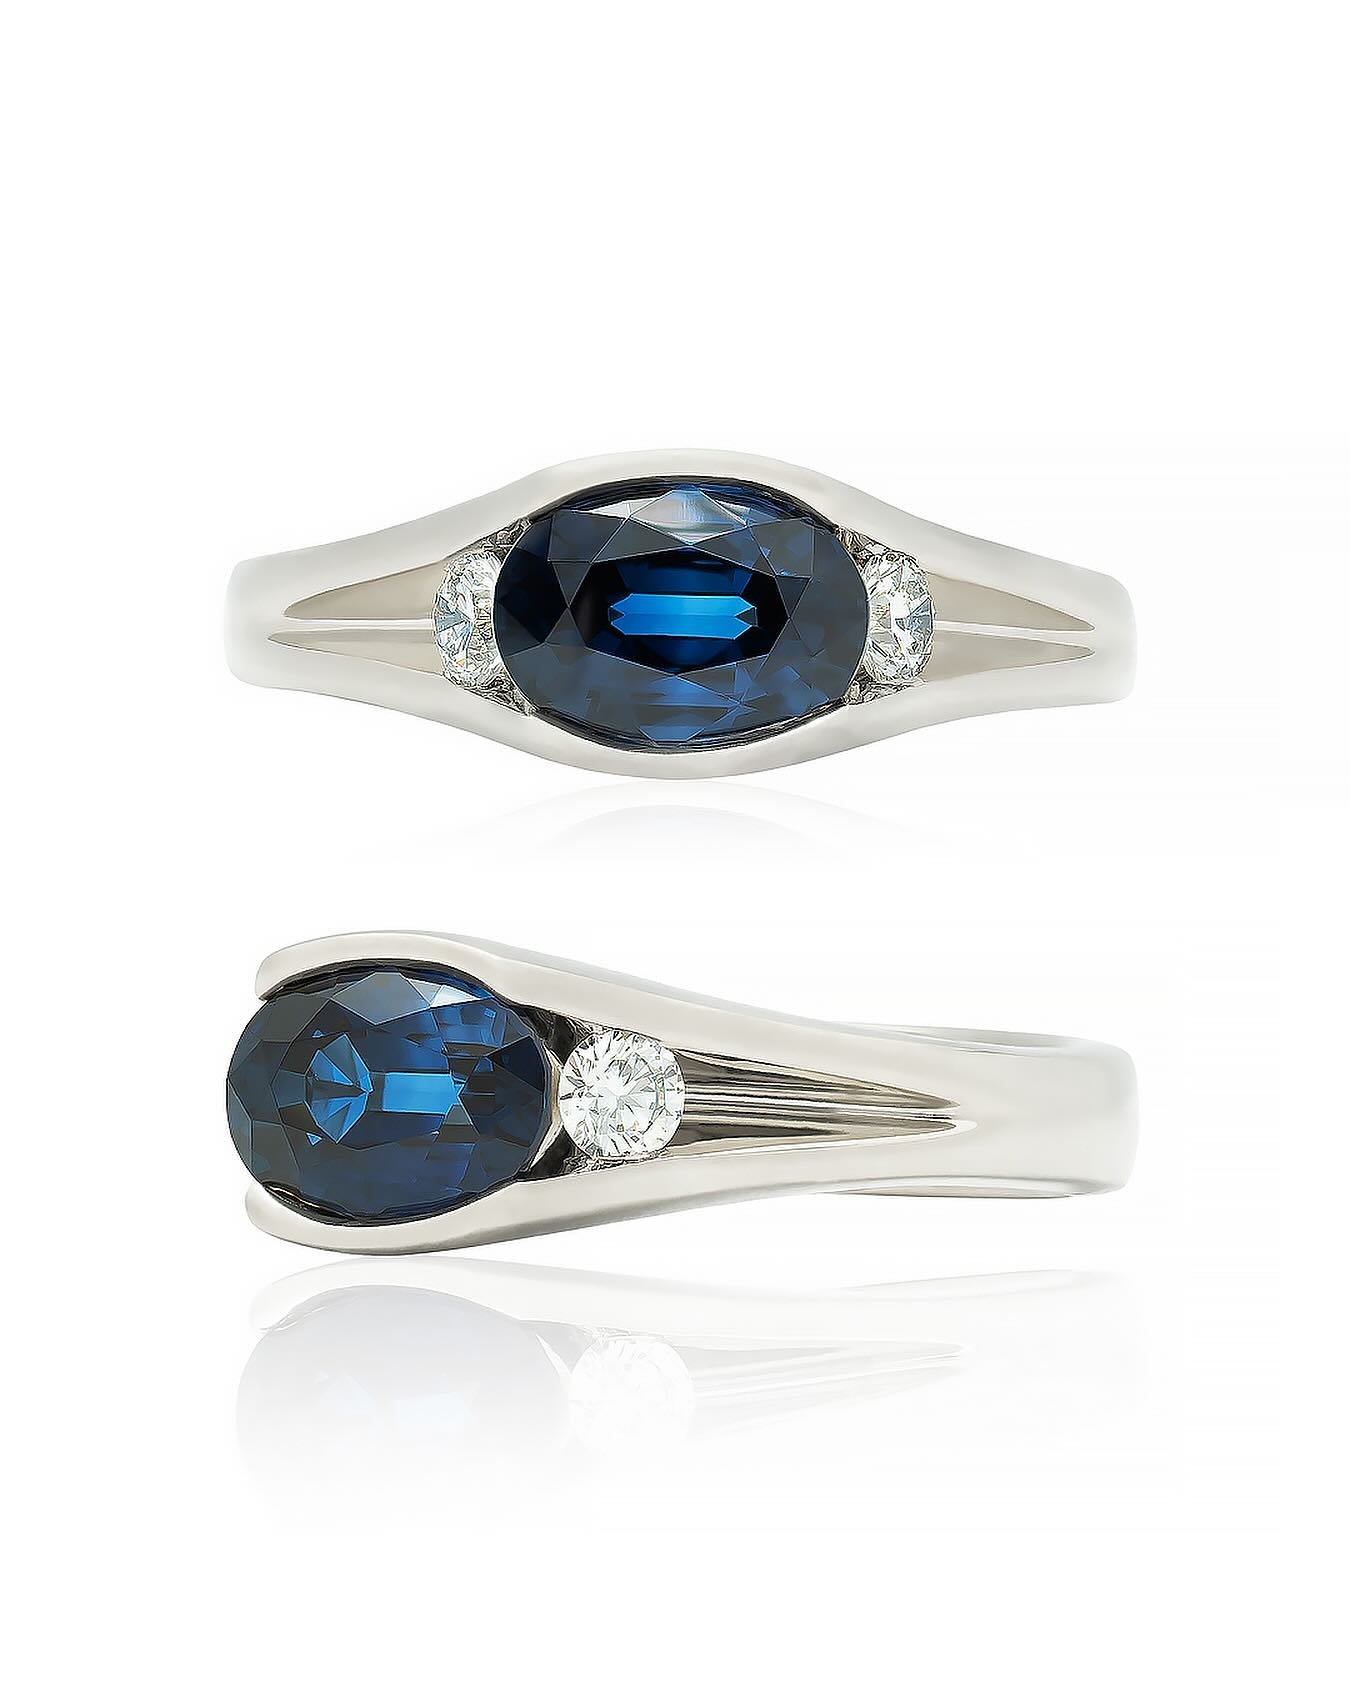 Sapphire &amp; Diamond Ring

Blue Sapphire : 1.9ct
Diamonds : .20ctw - VS1 - D/E
14kt White Gold
$7,000

Big Island Jewelers
Fine Jewelry - Made by Hand
#madeinhawaii